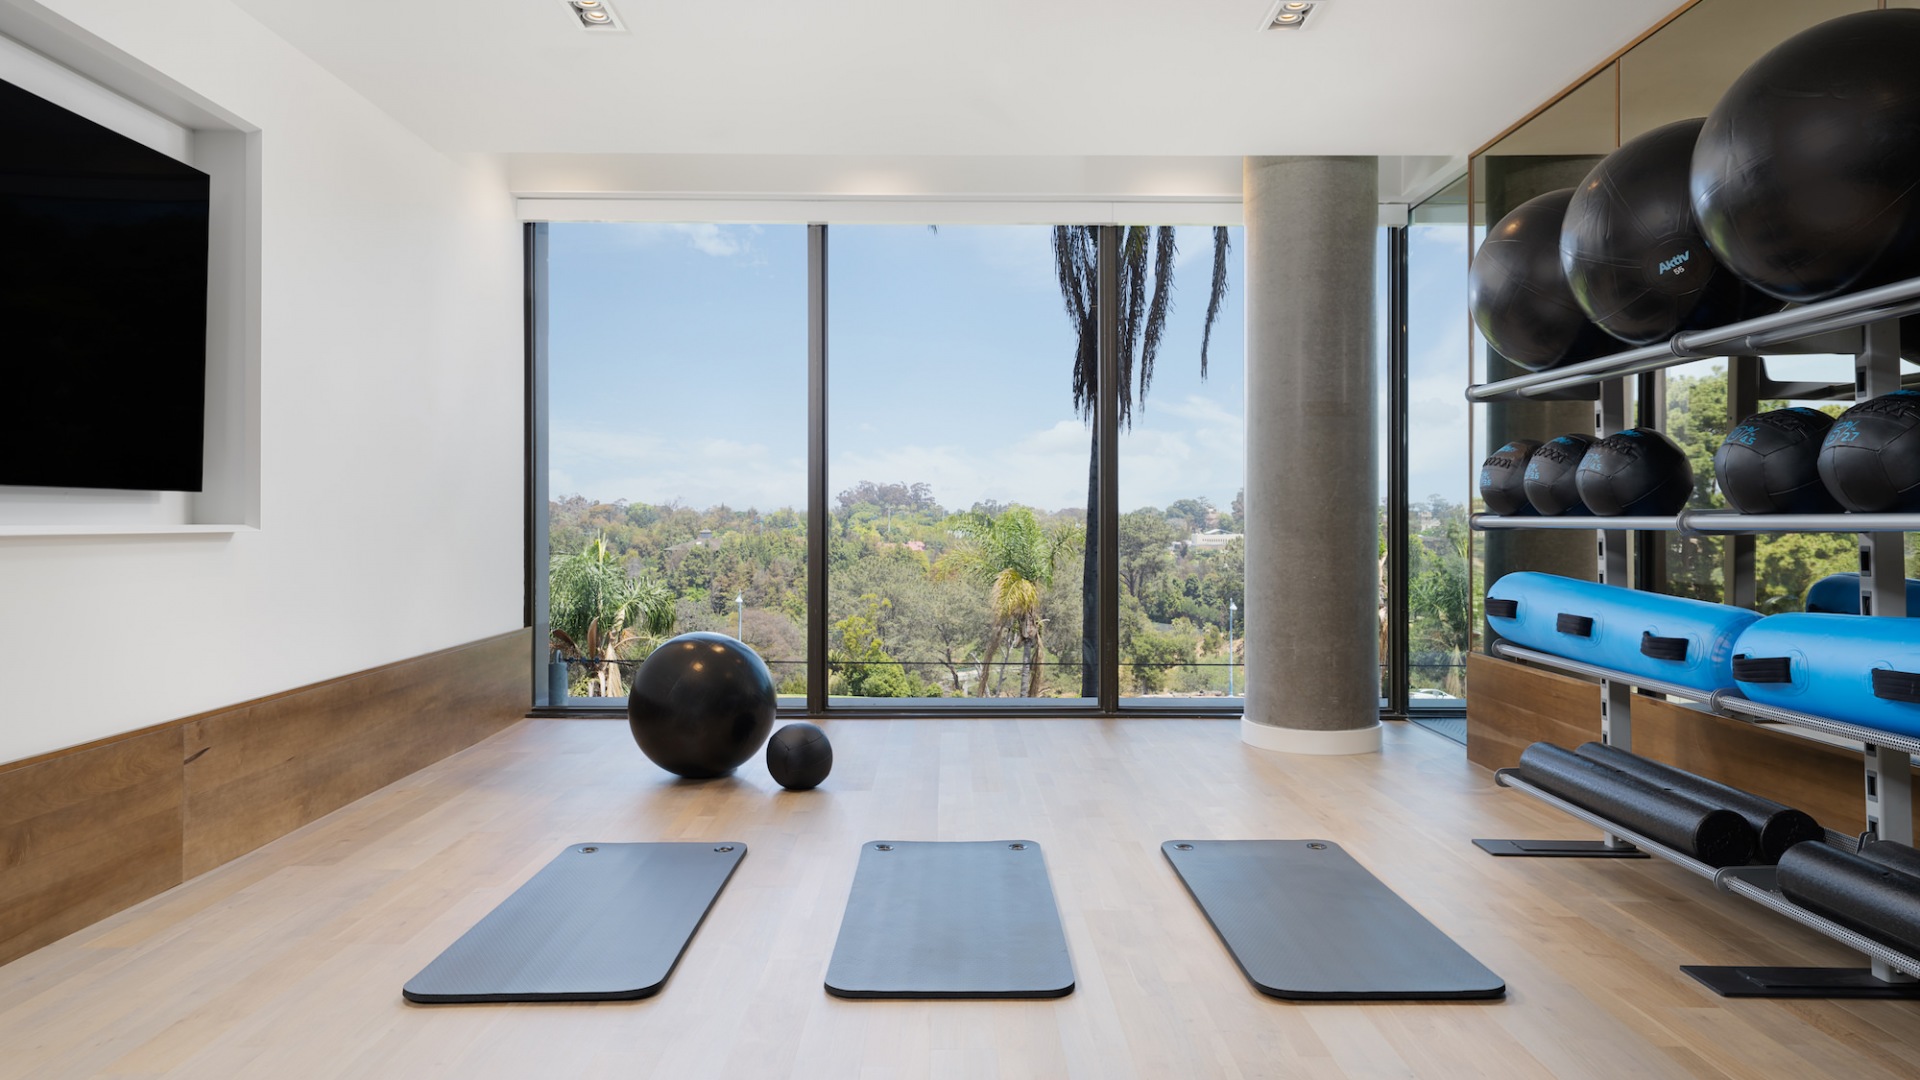 Wellness Studio with Yoga mats, tv and Balboa Park views